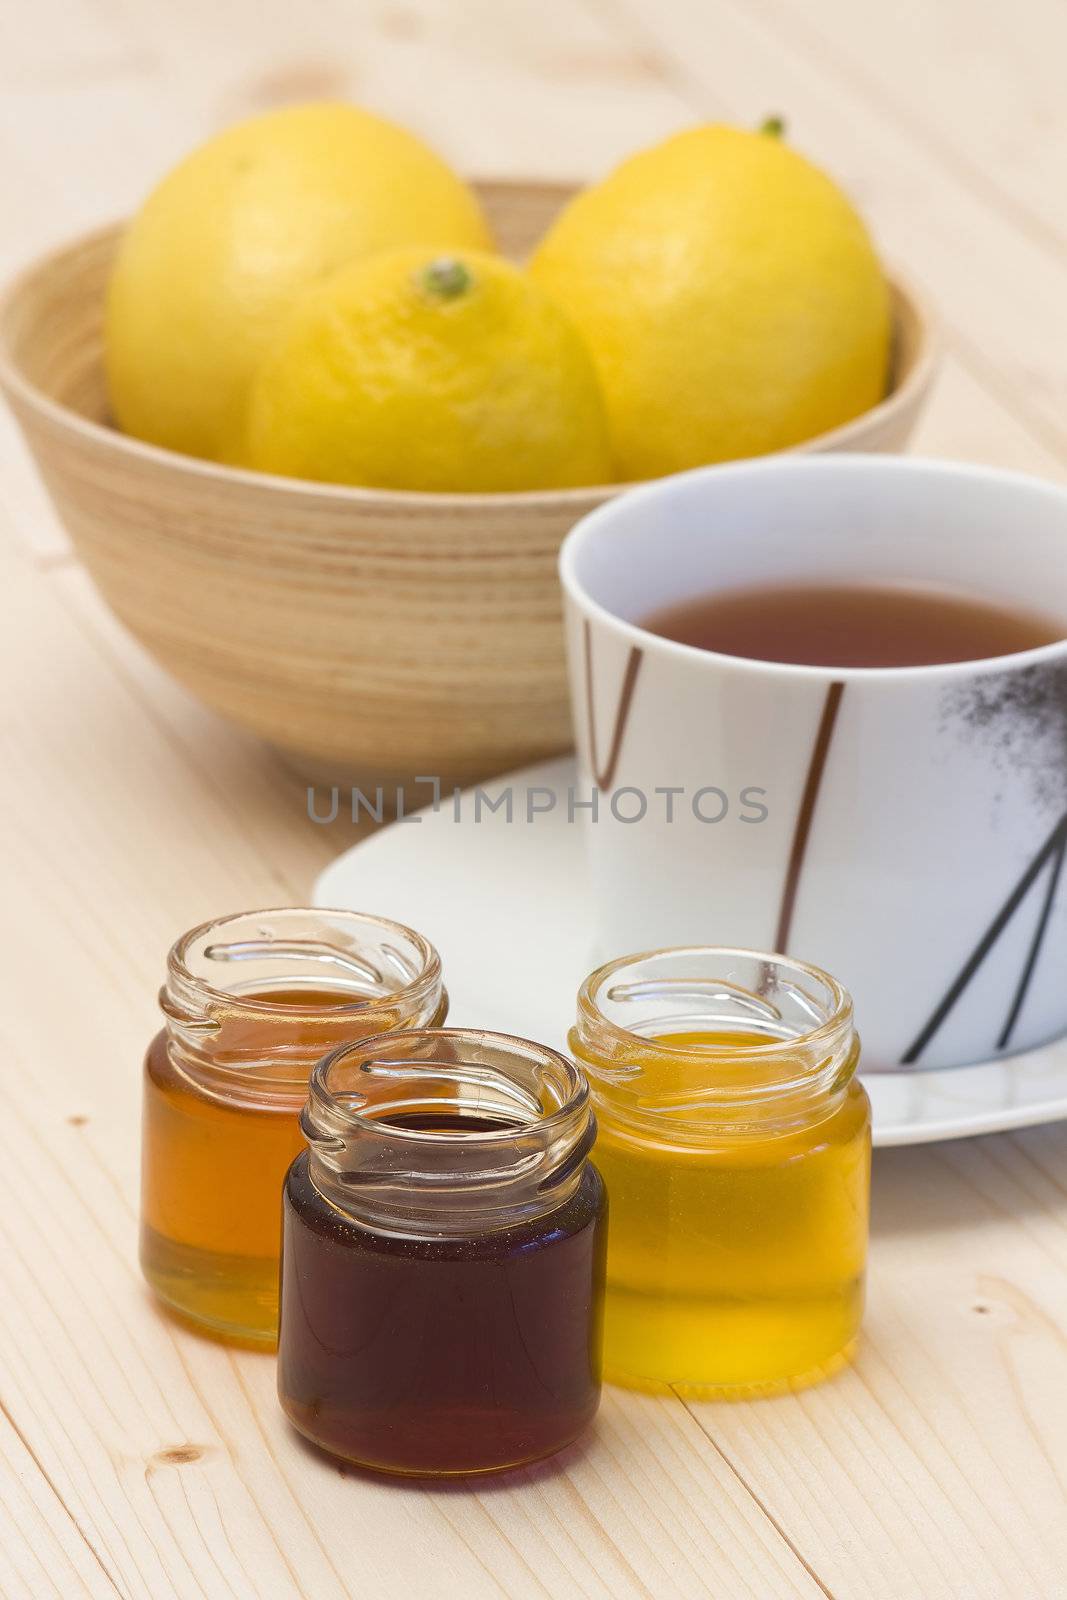 cup of lemon tea and honey by miradrozdowski